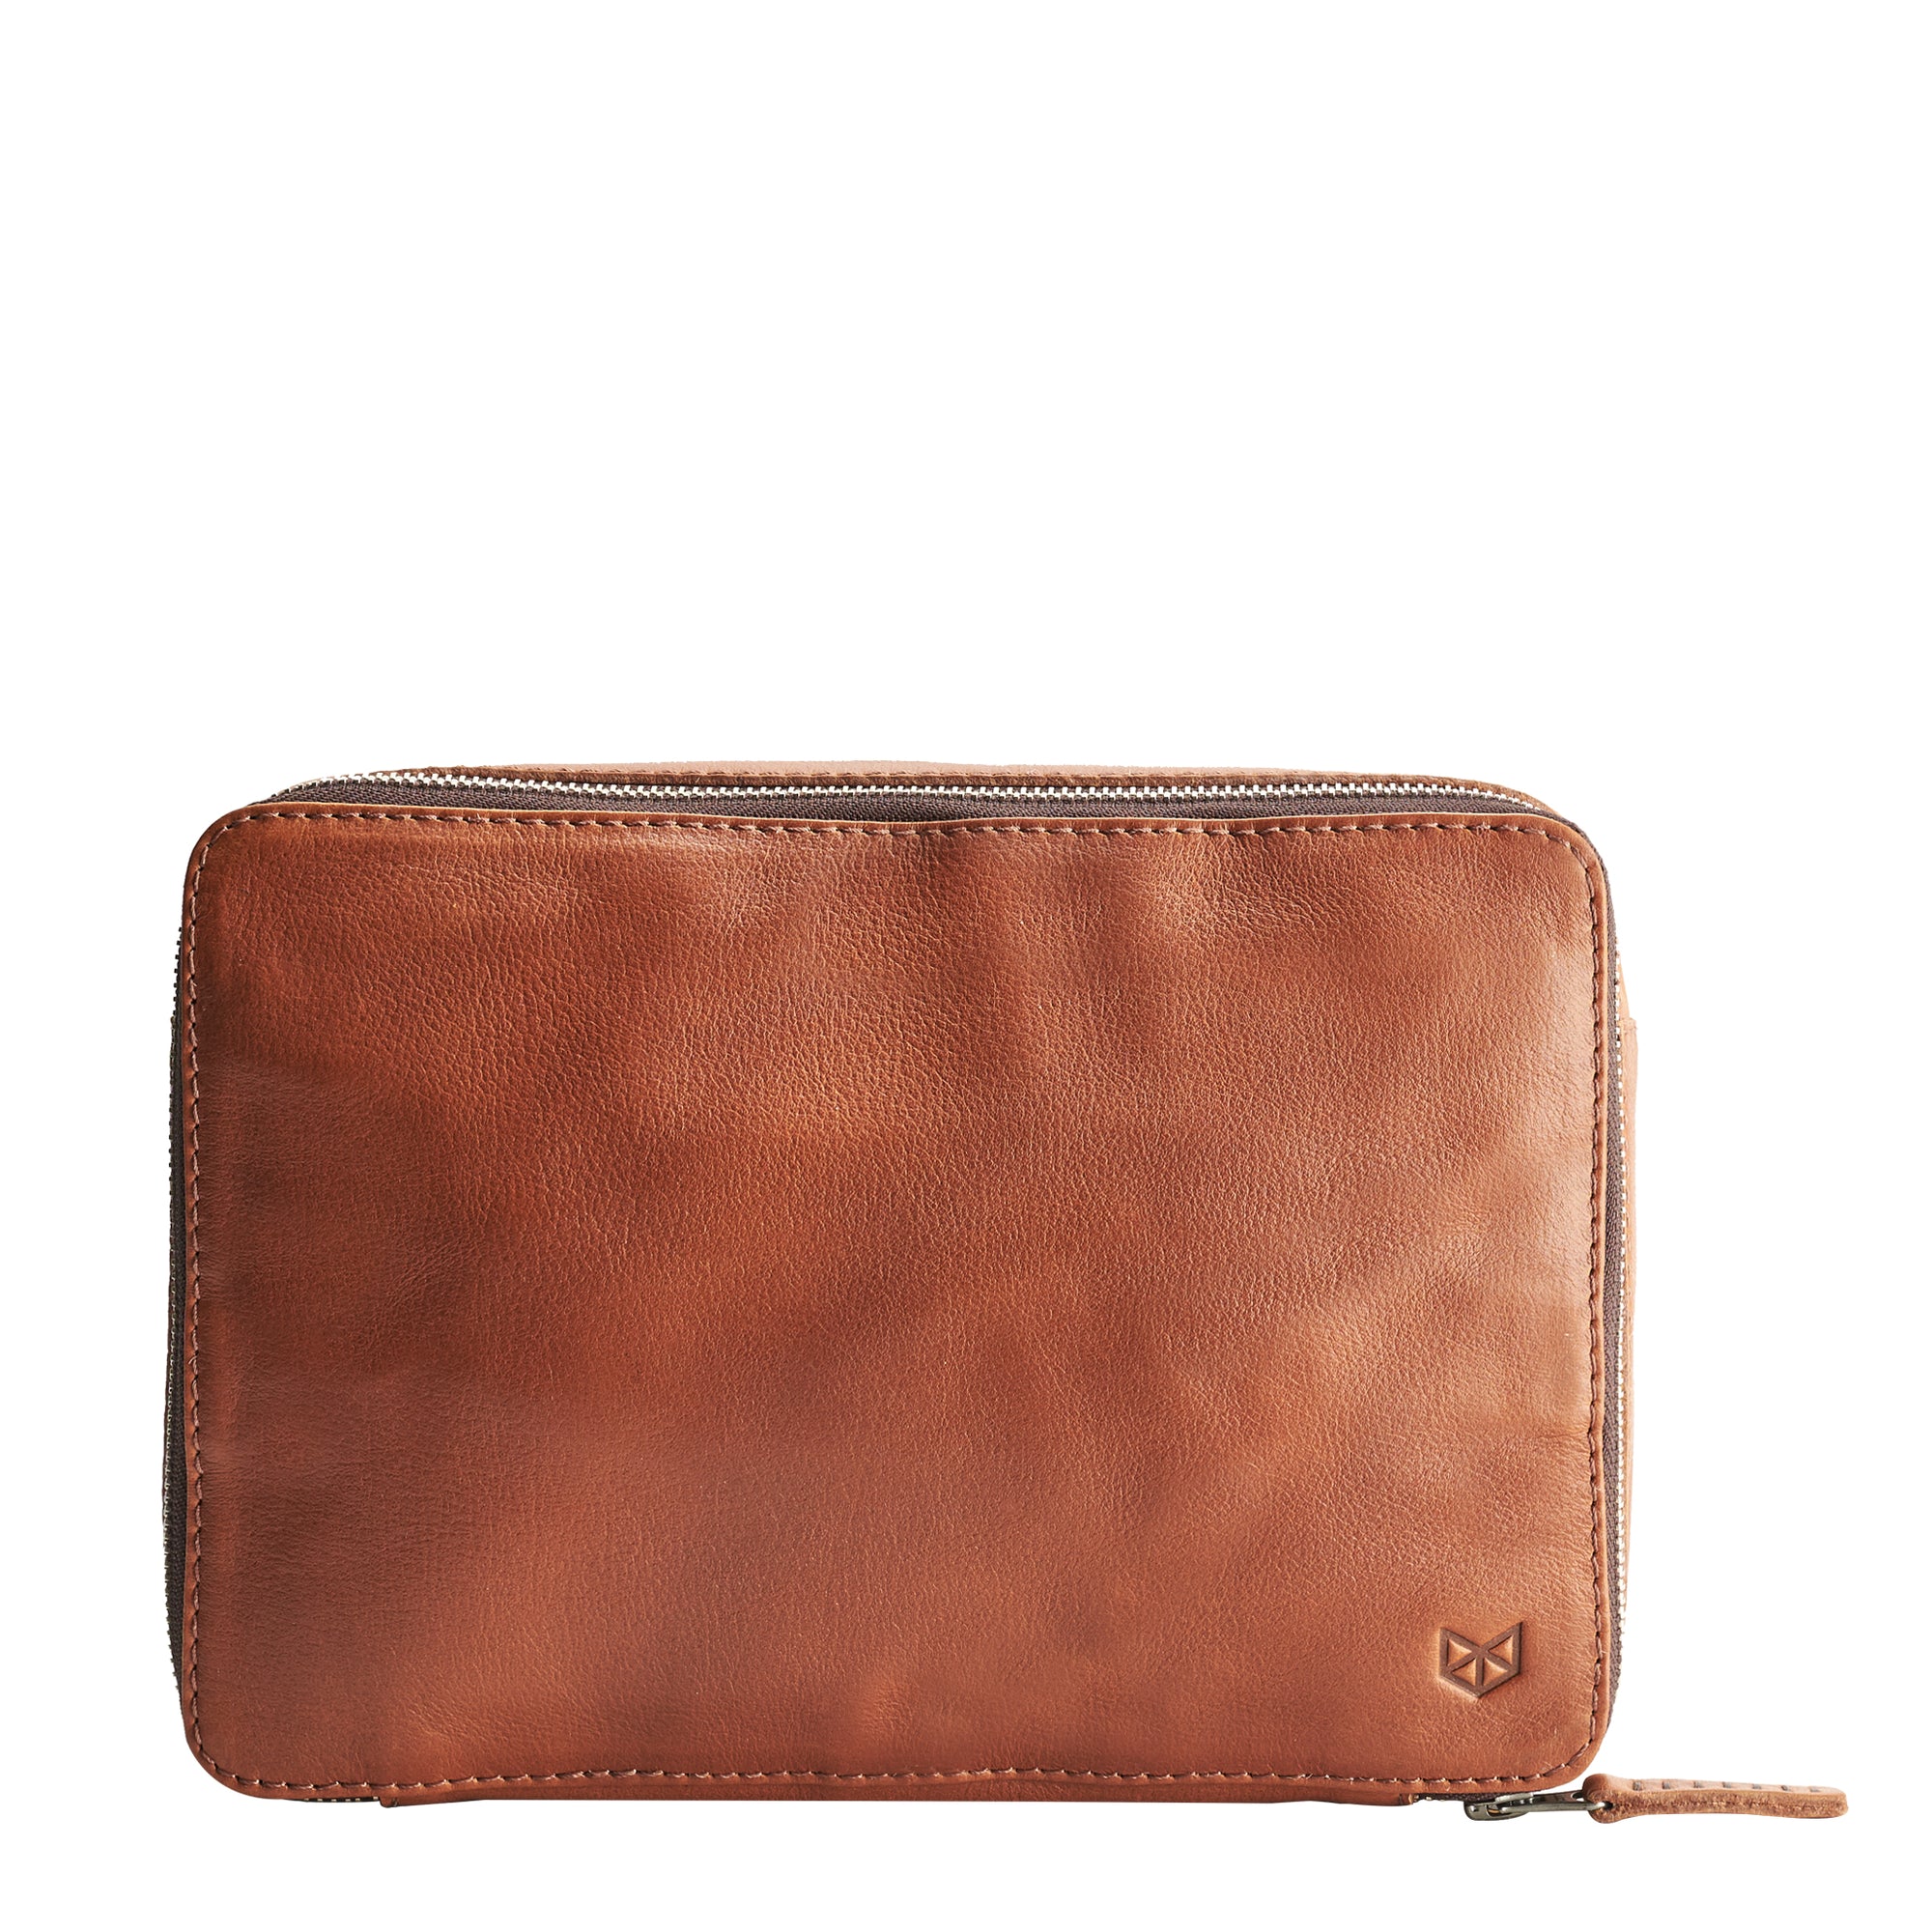 Tan  leather gadget bag, tech dopp kit, electronic organizer. Fits iPad Pro with Apple pencil.